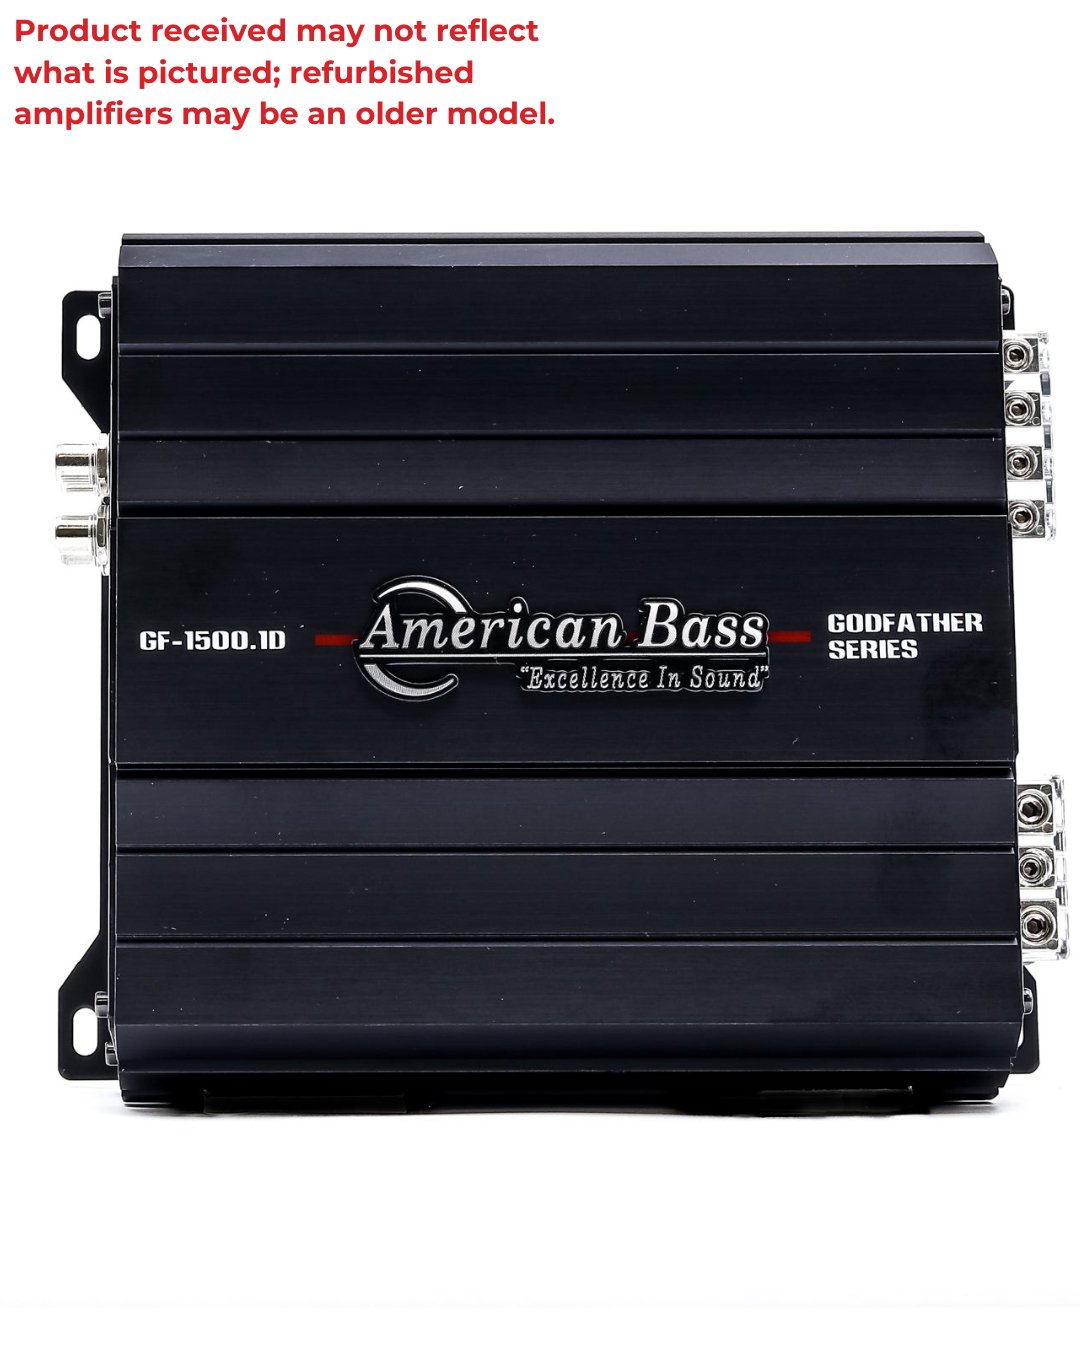 Godfather 1500.1D Amplifier Refurbished - American Bass Audio